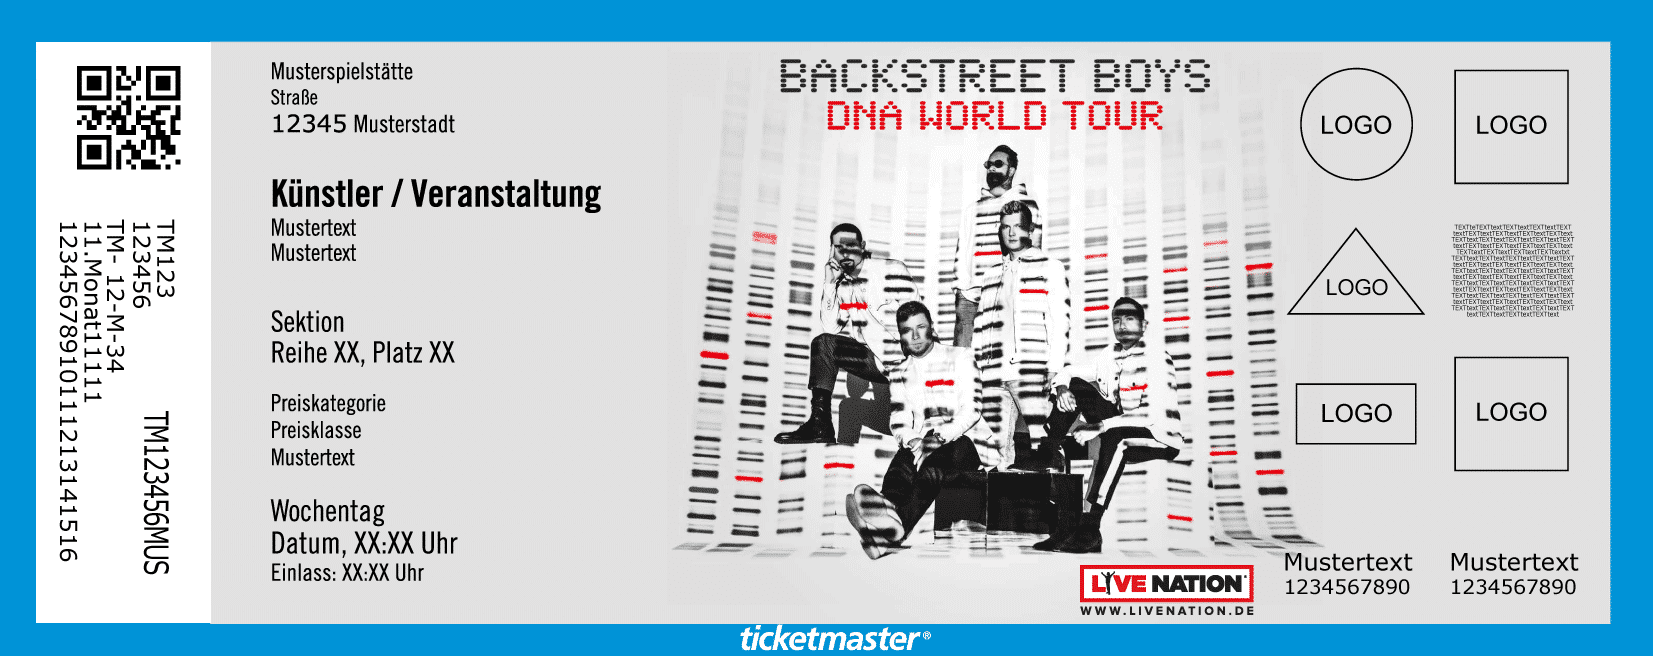 Backstreet Boys Deutschland Tour 2019